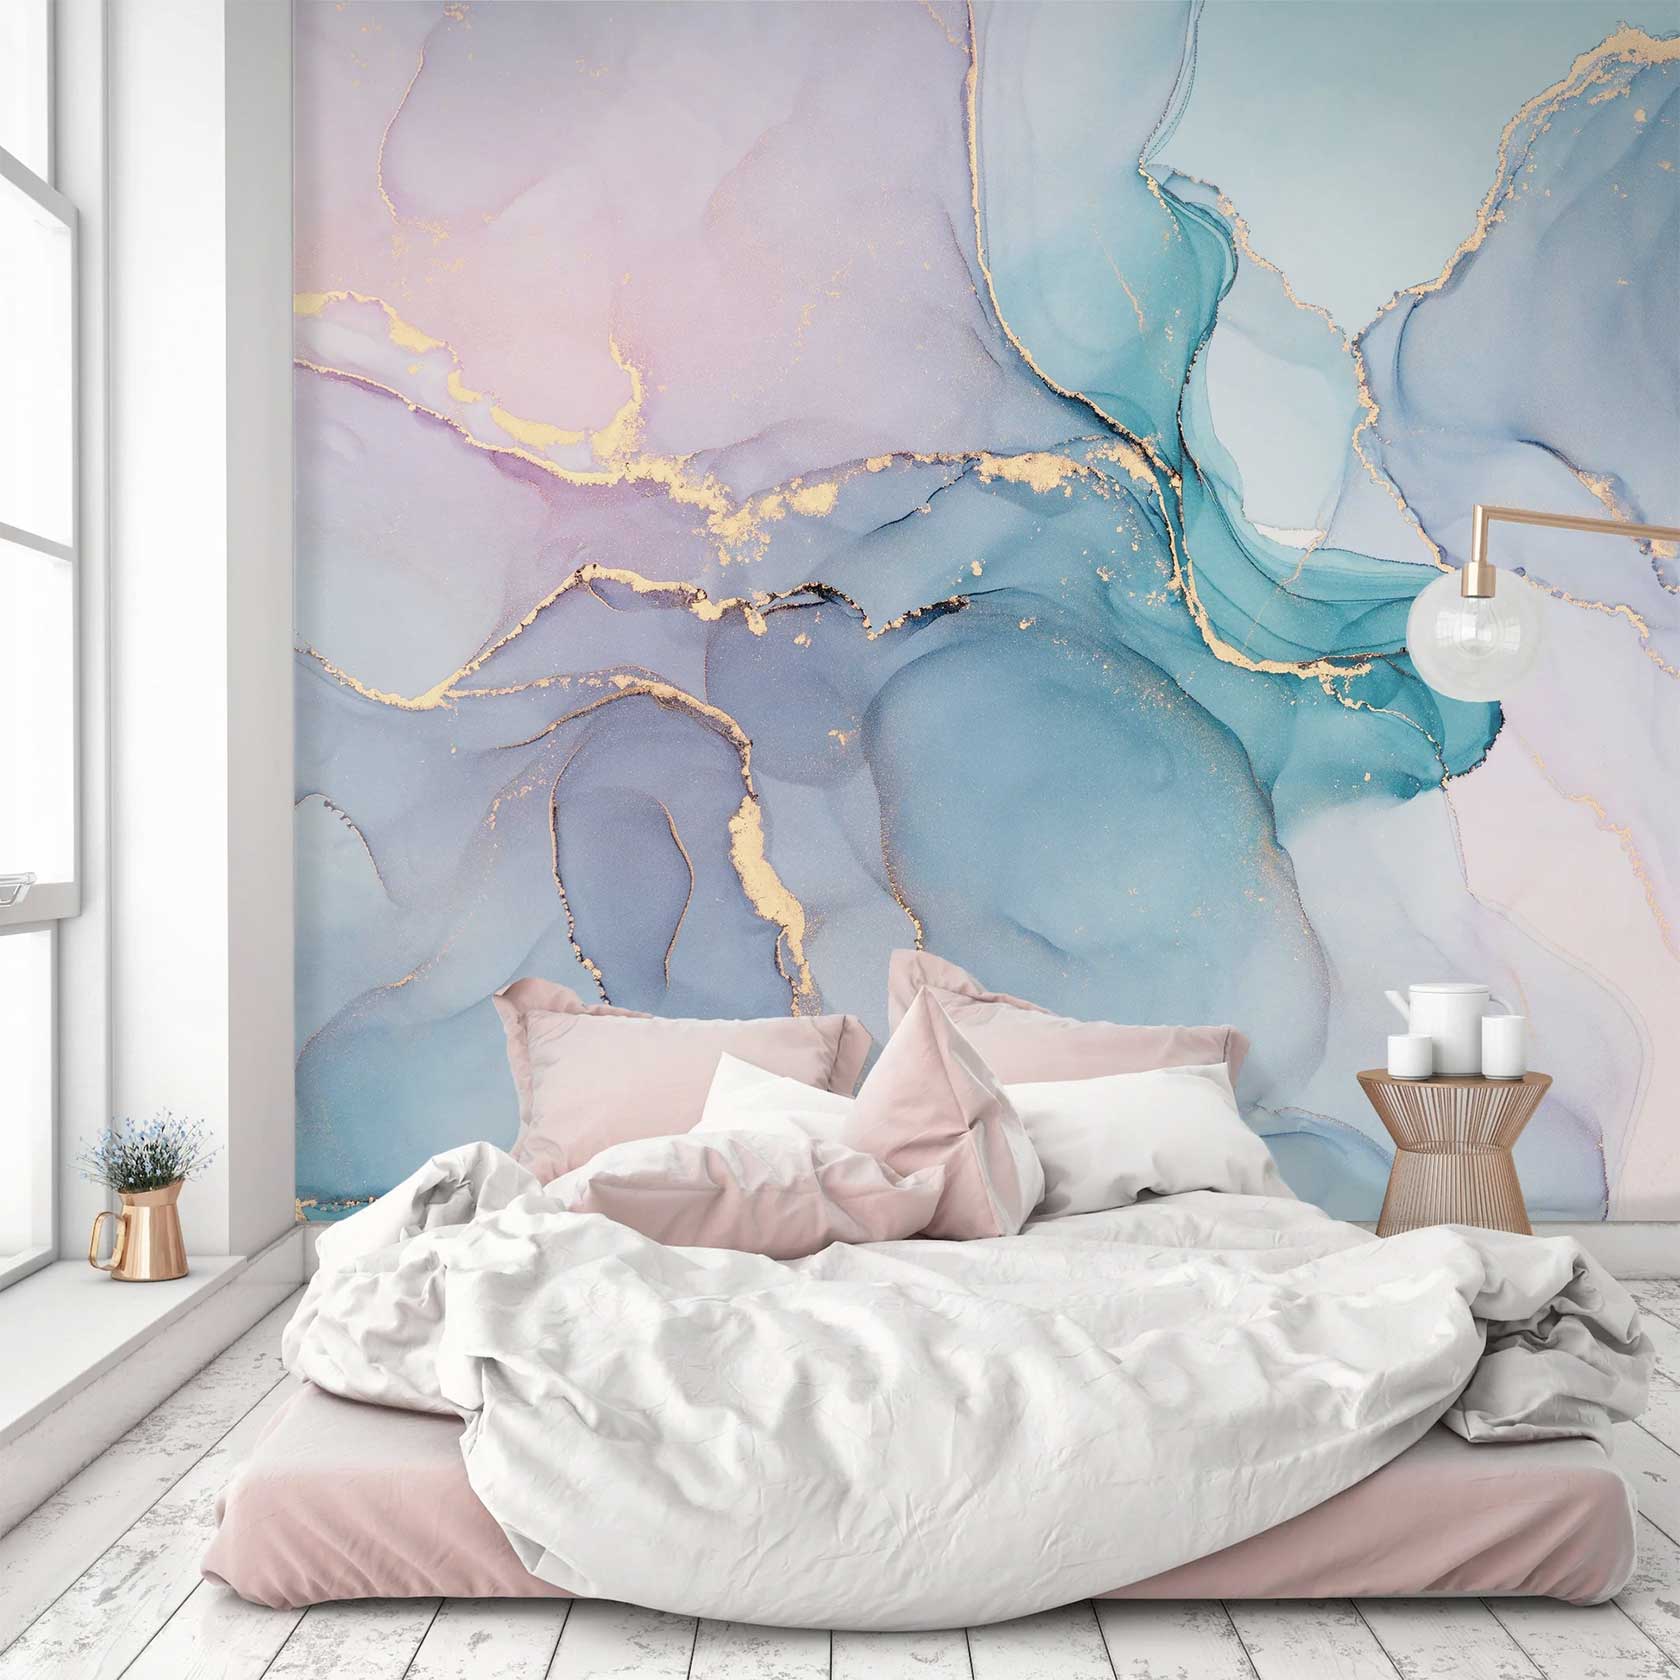 Wallpaper Mural For Your Bedroom